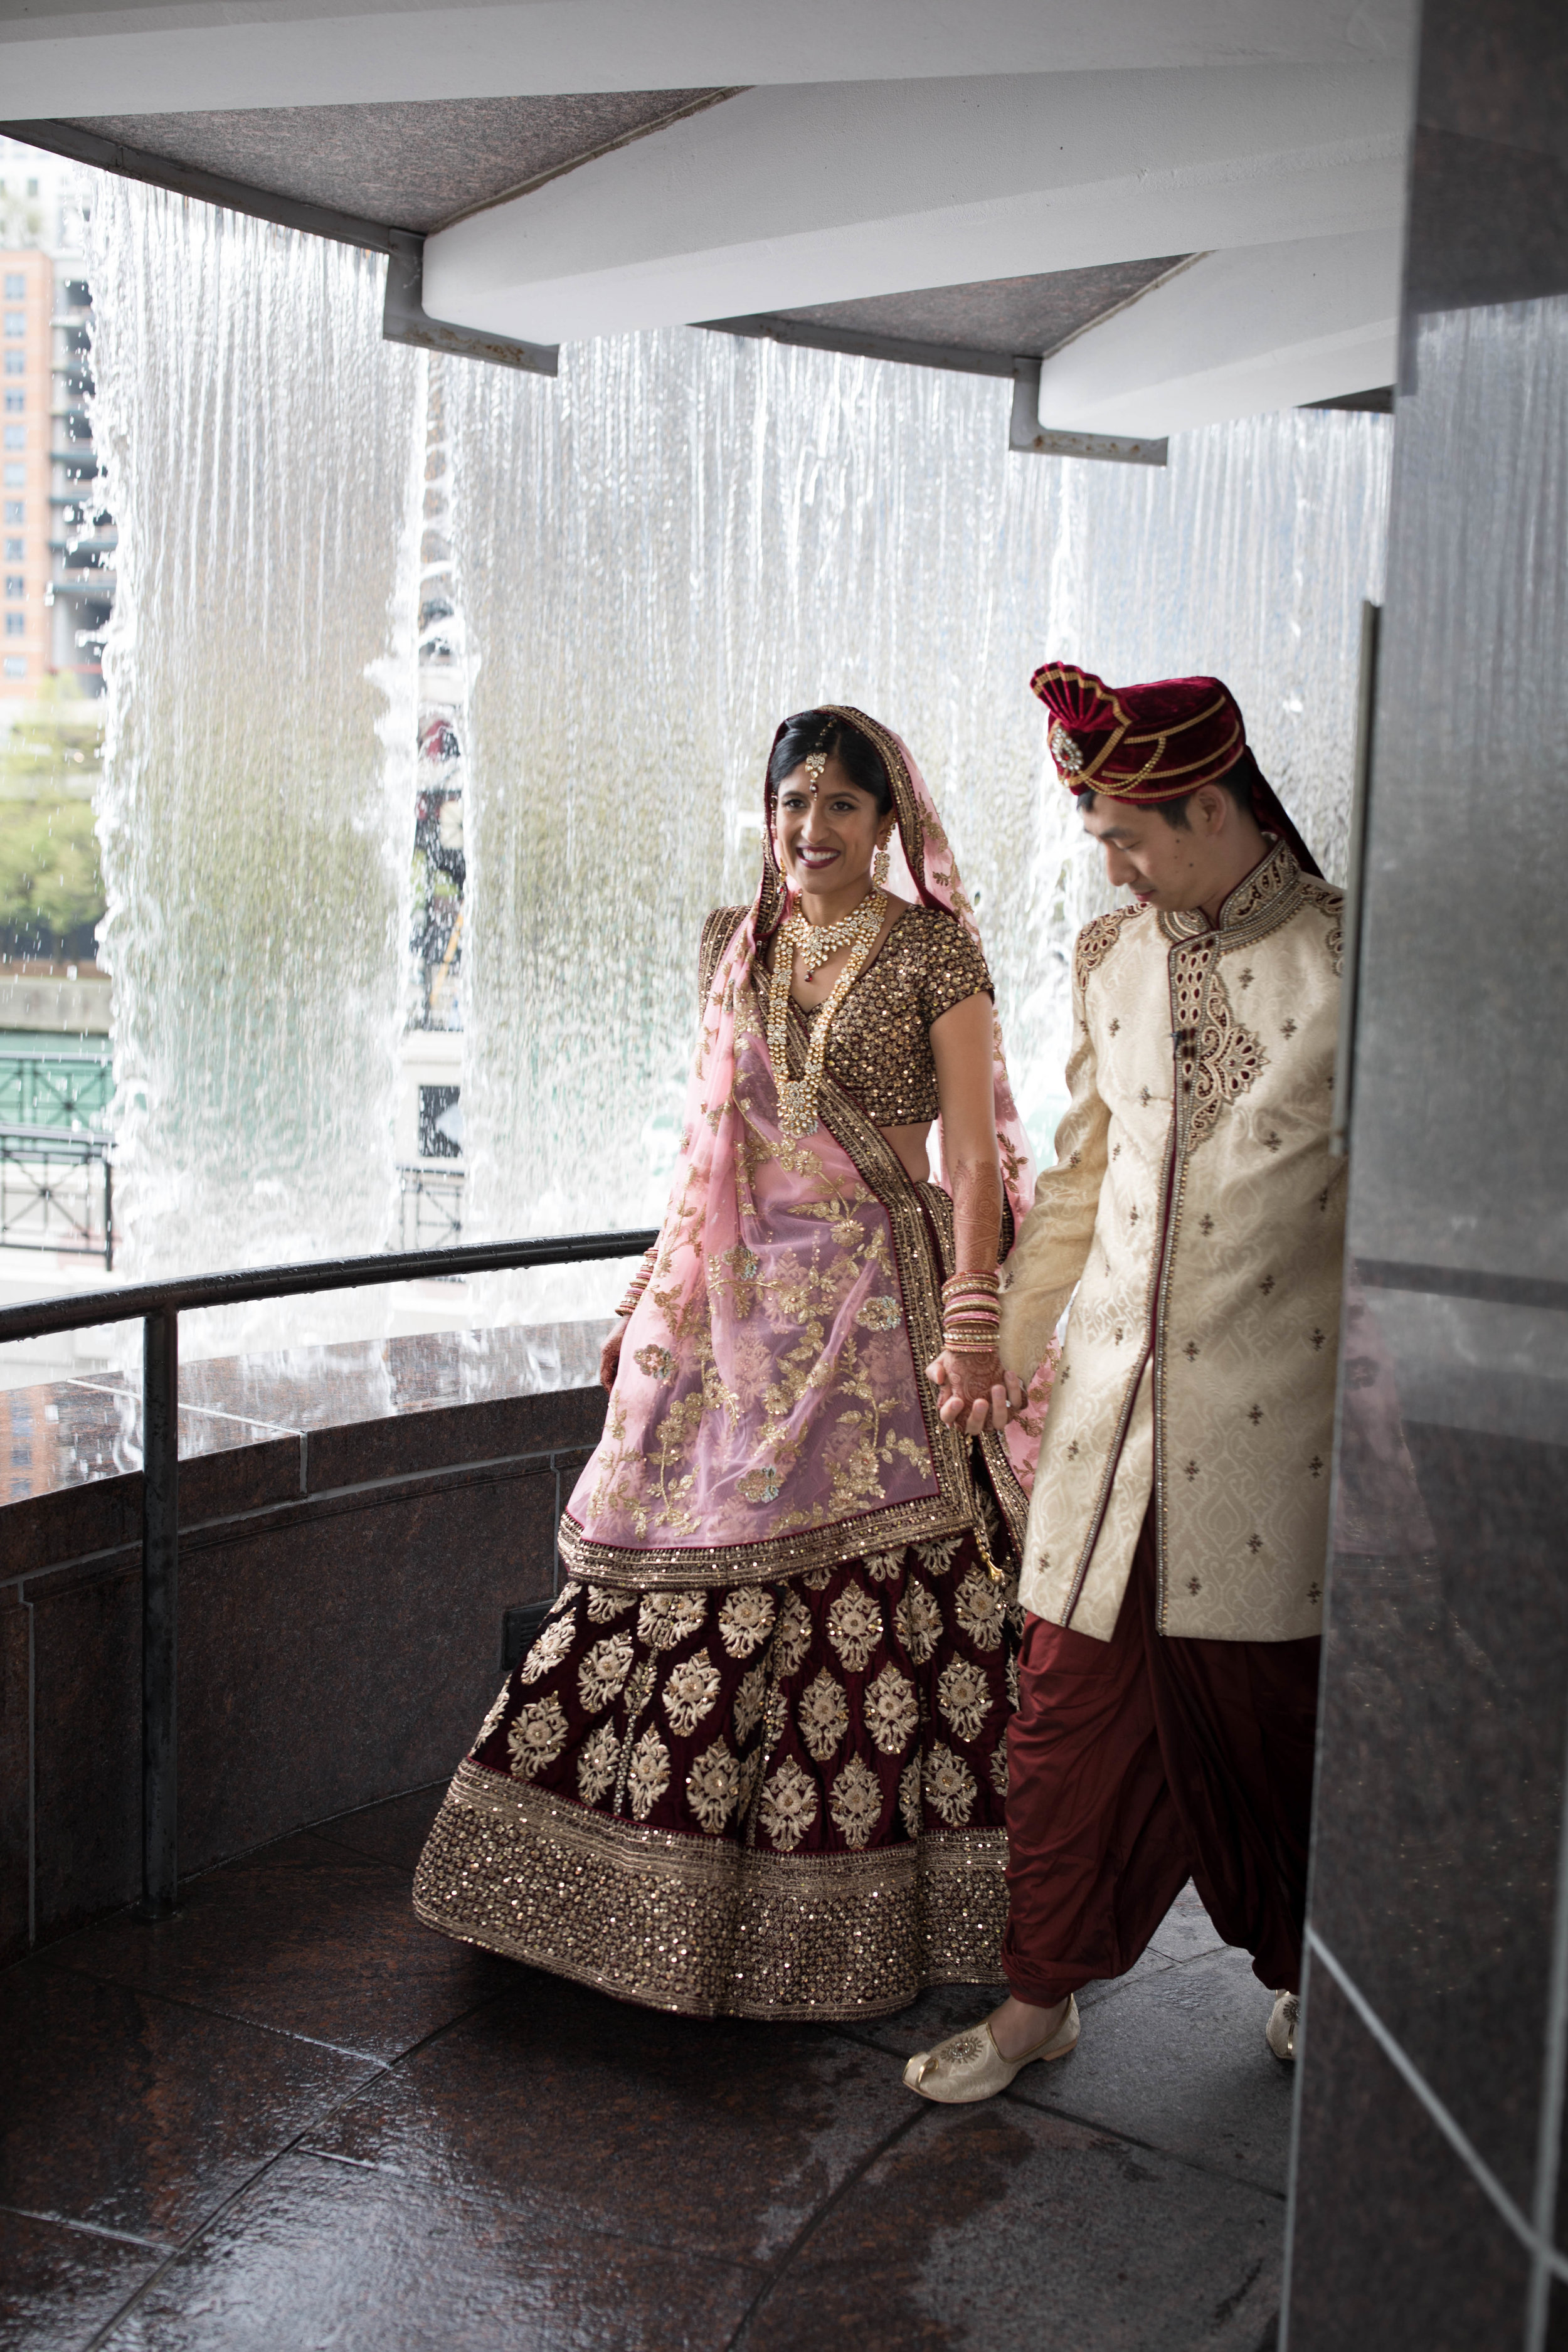 LeCapeWeddings - Chicago South Asian Wedding -54.jpg